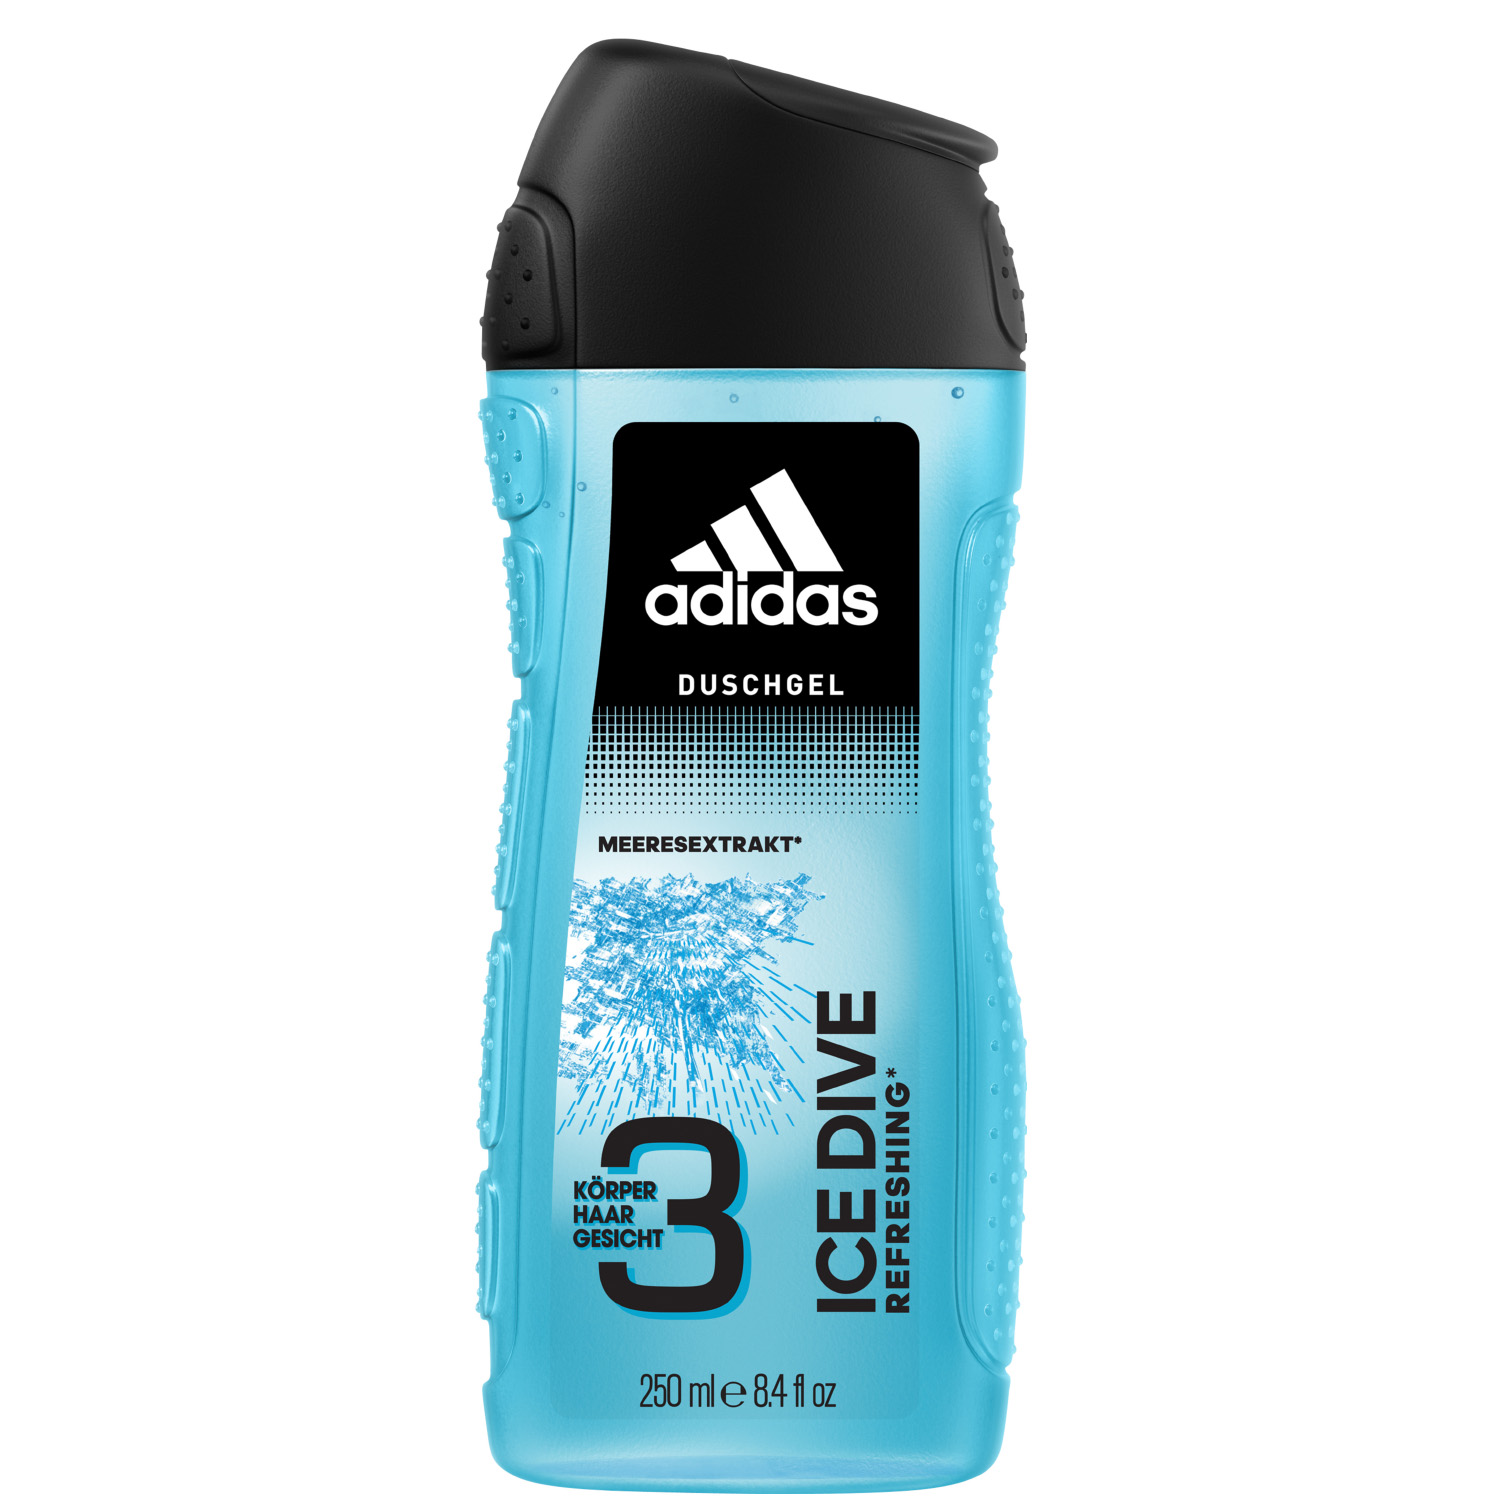 Adidas Ice Dive 3in1 Shower Gel 250ml